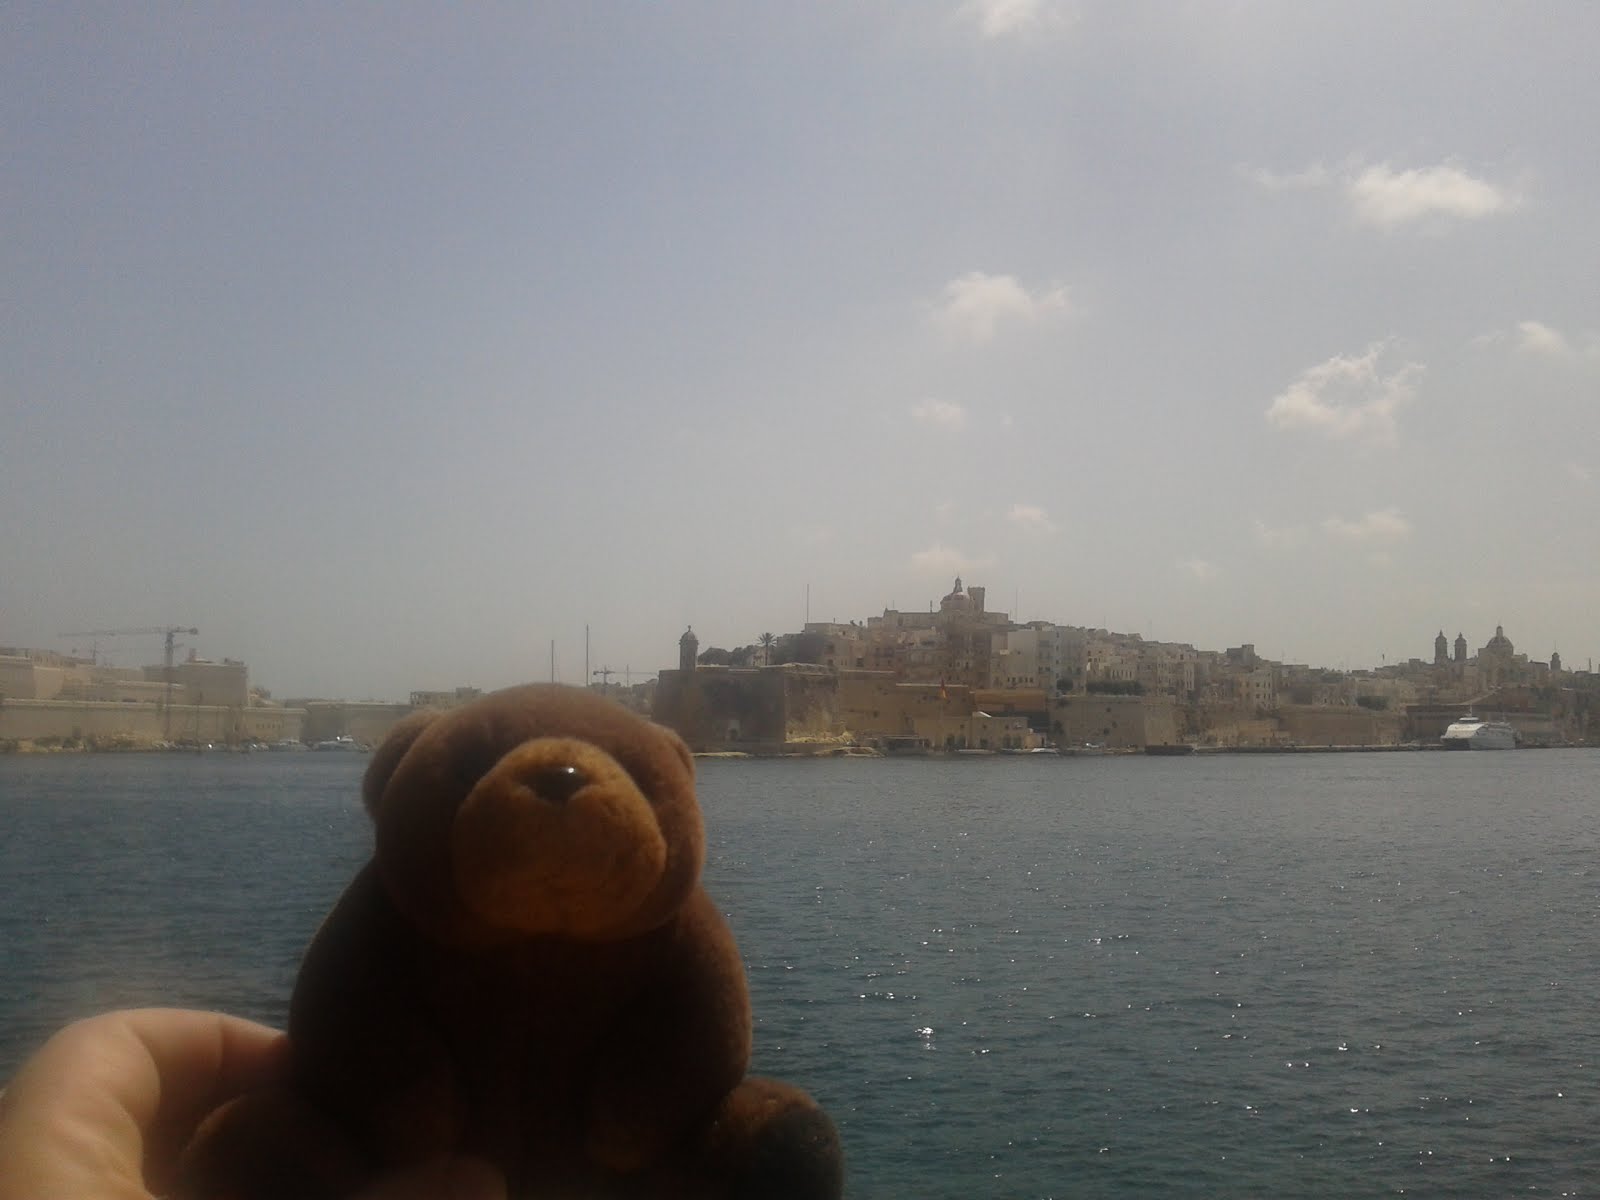 Teddy Bear in Malta